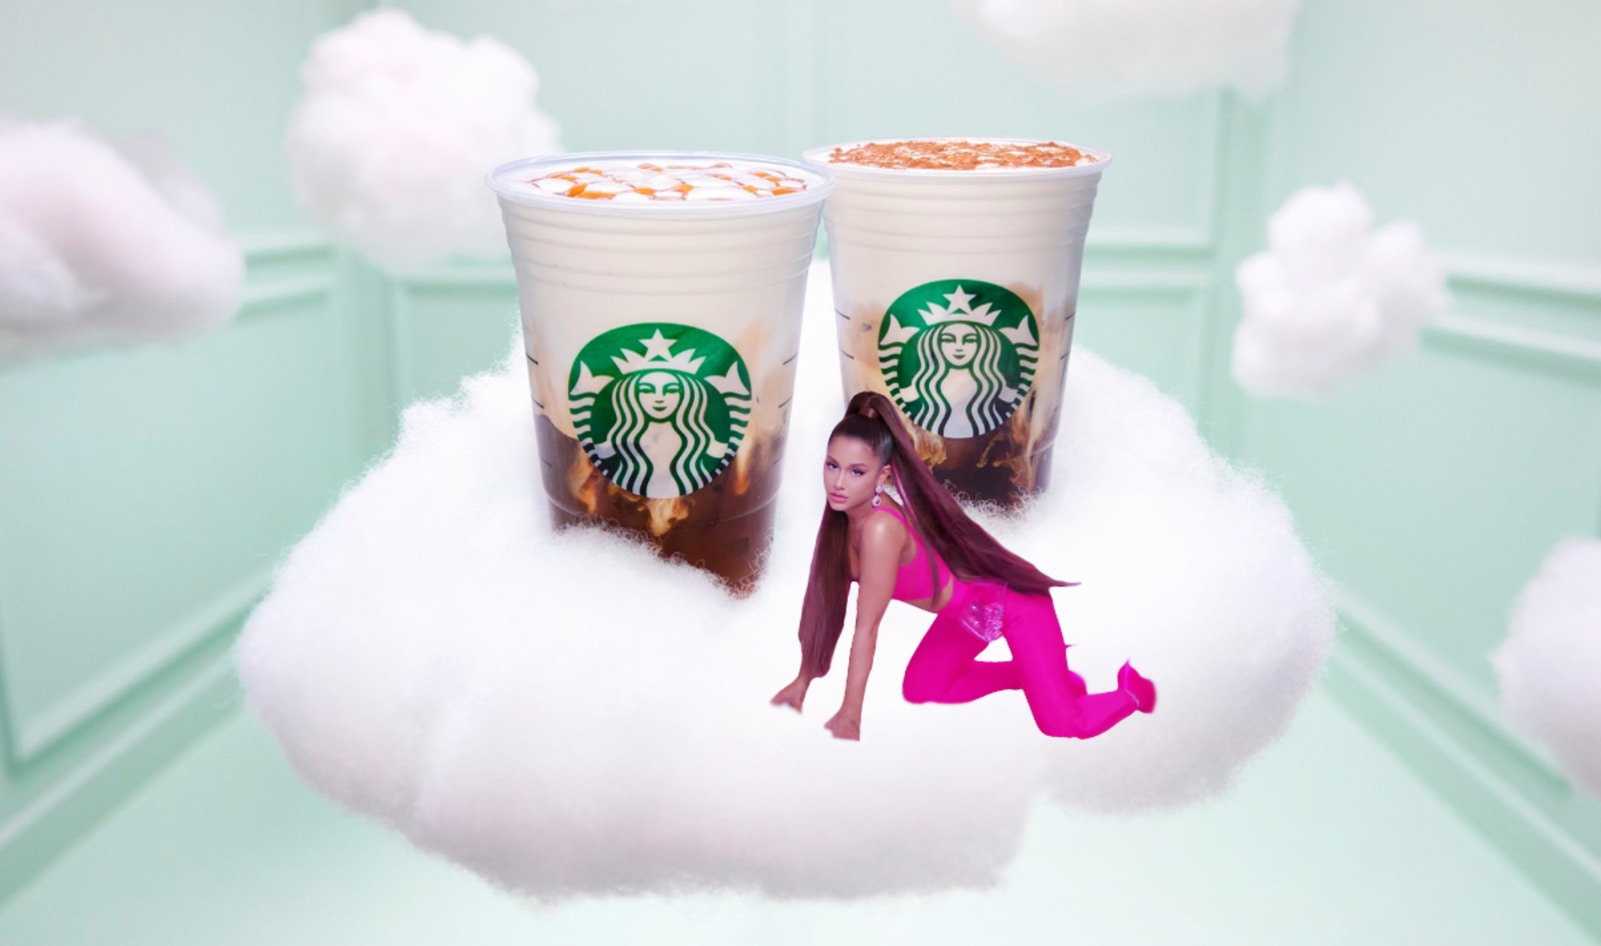 Ariana Grande Sparks Twitter War by Promoting Egg-Filled Starbucks Drink